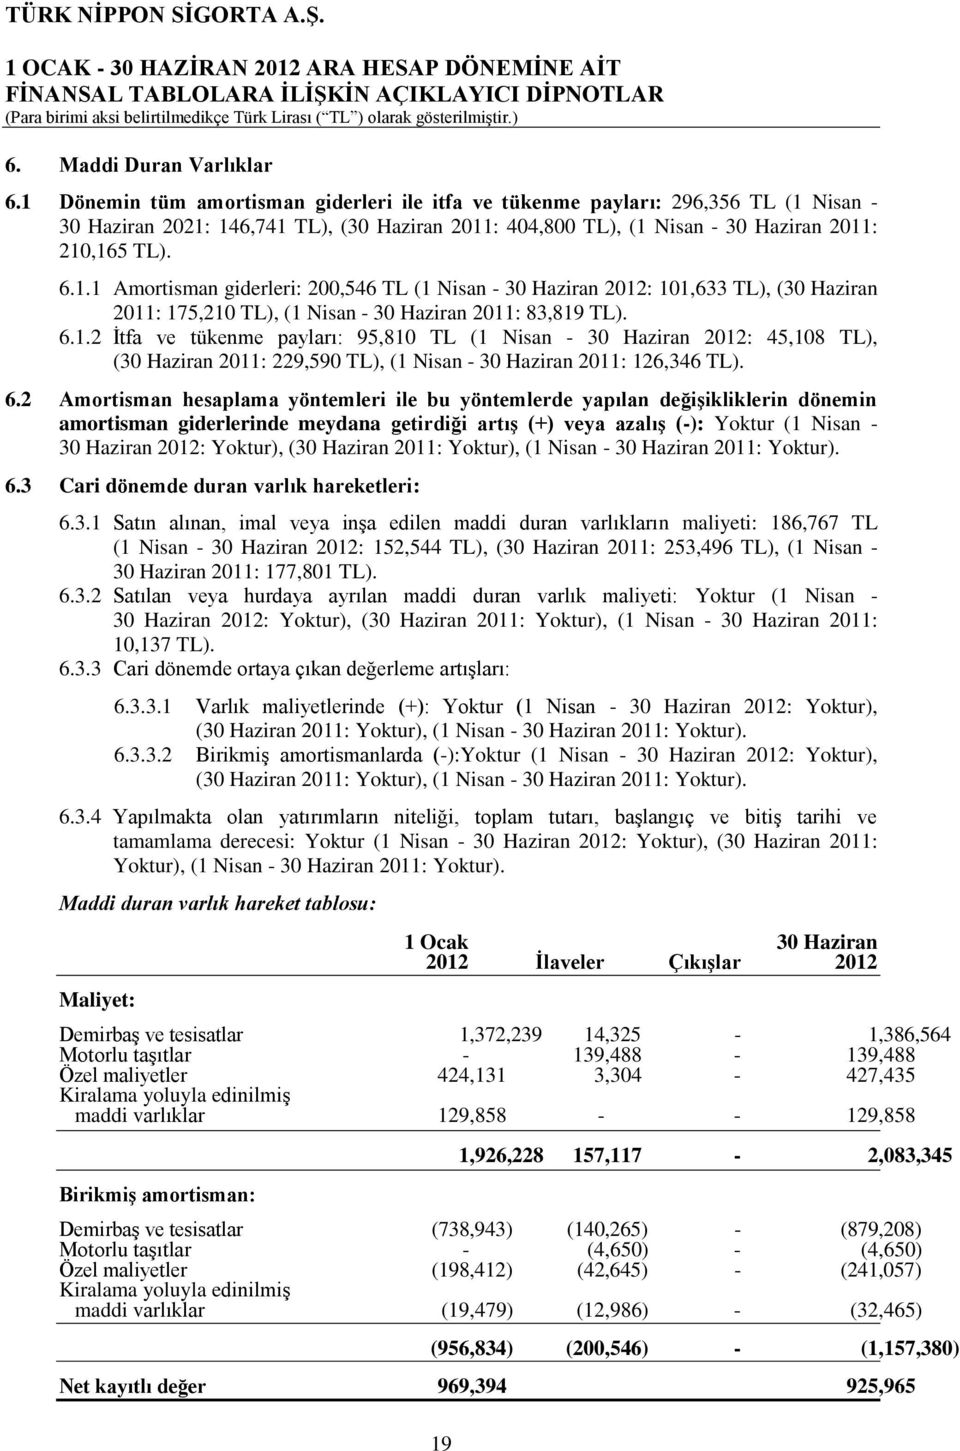 6.1.2 Ġtfa ve tükenme payları: 95,810 TL (1 Nisan - 30 Haziran 2012: 45,108 TL), (30 Haziran 2011: 229,590 TL), (1 Nisan - 30 Haziran 2011: 126,346 TL). 6.